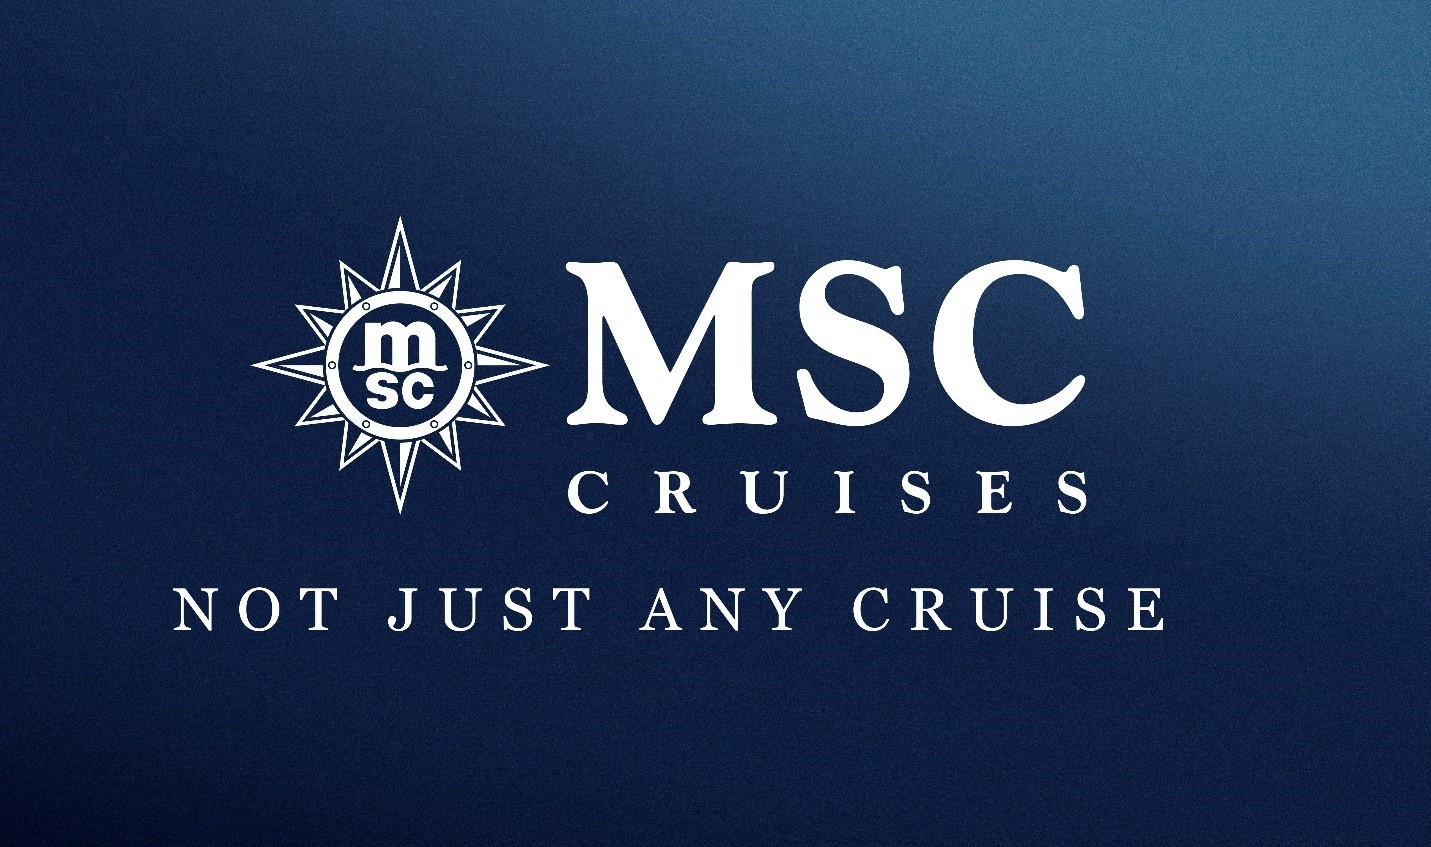 https://0201.nccdn.net/1_2/000/000/0bb/230/msc_cruises-logo-Small-1431x847.jpg